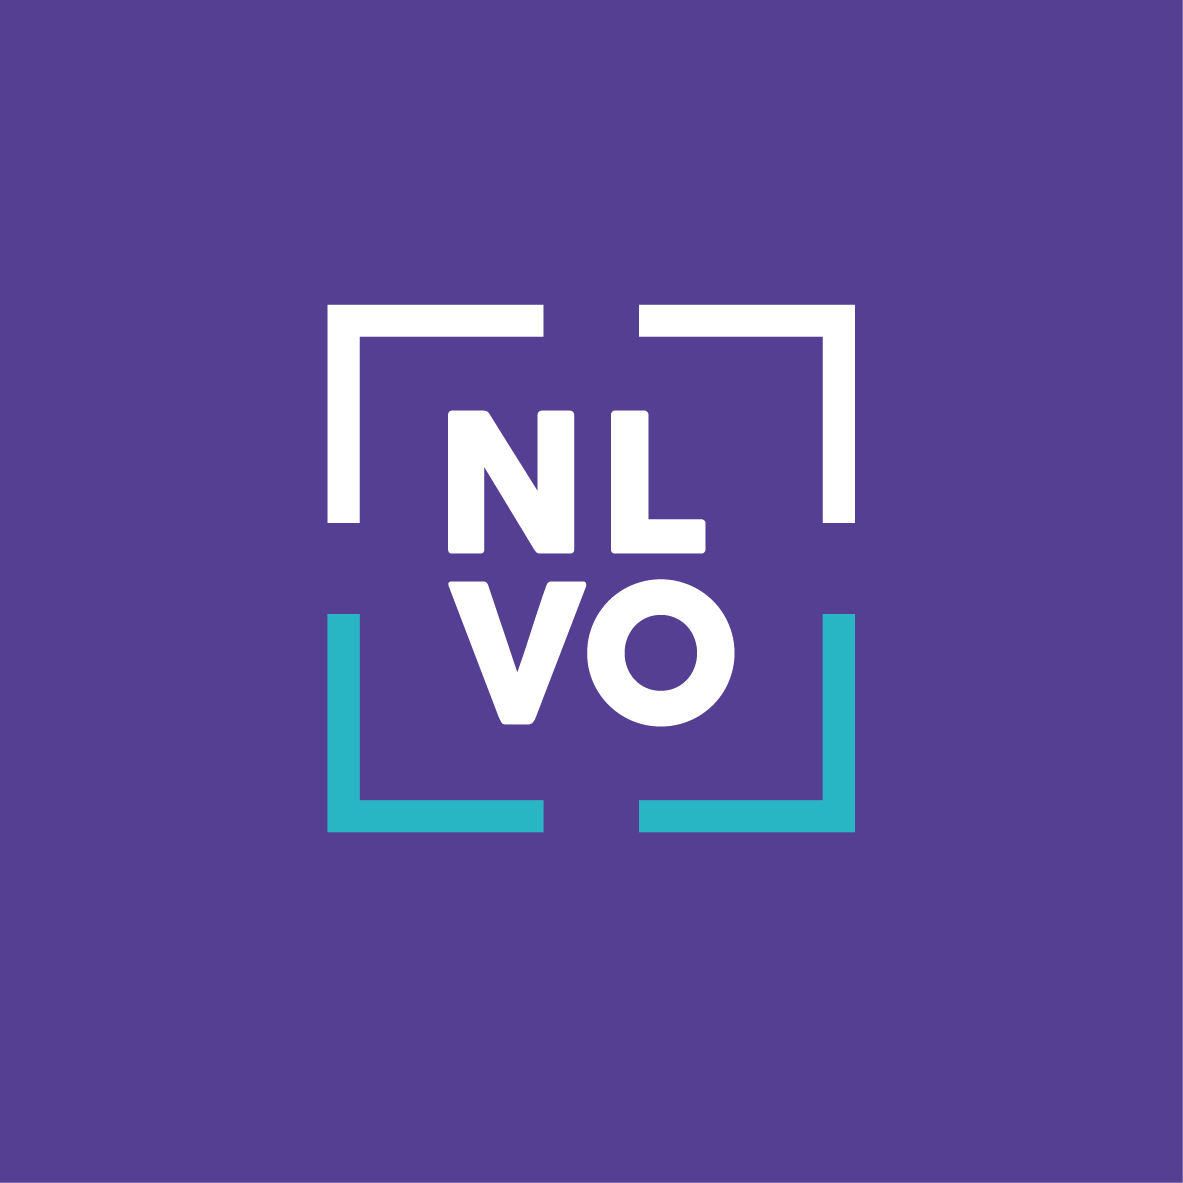 NLVO logo on purple background